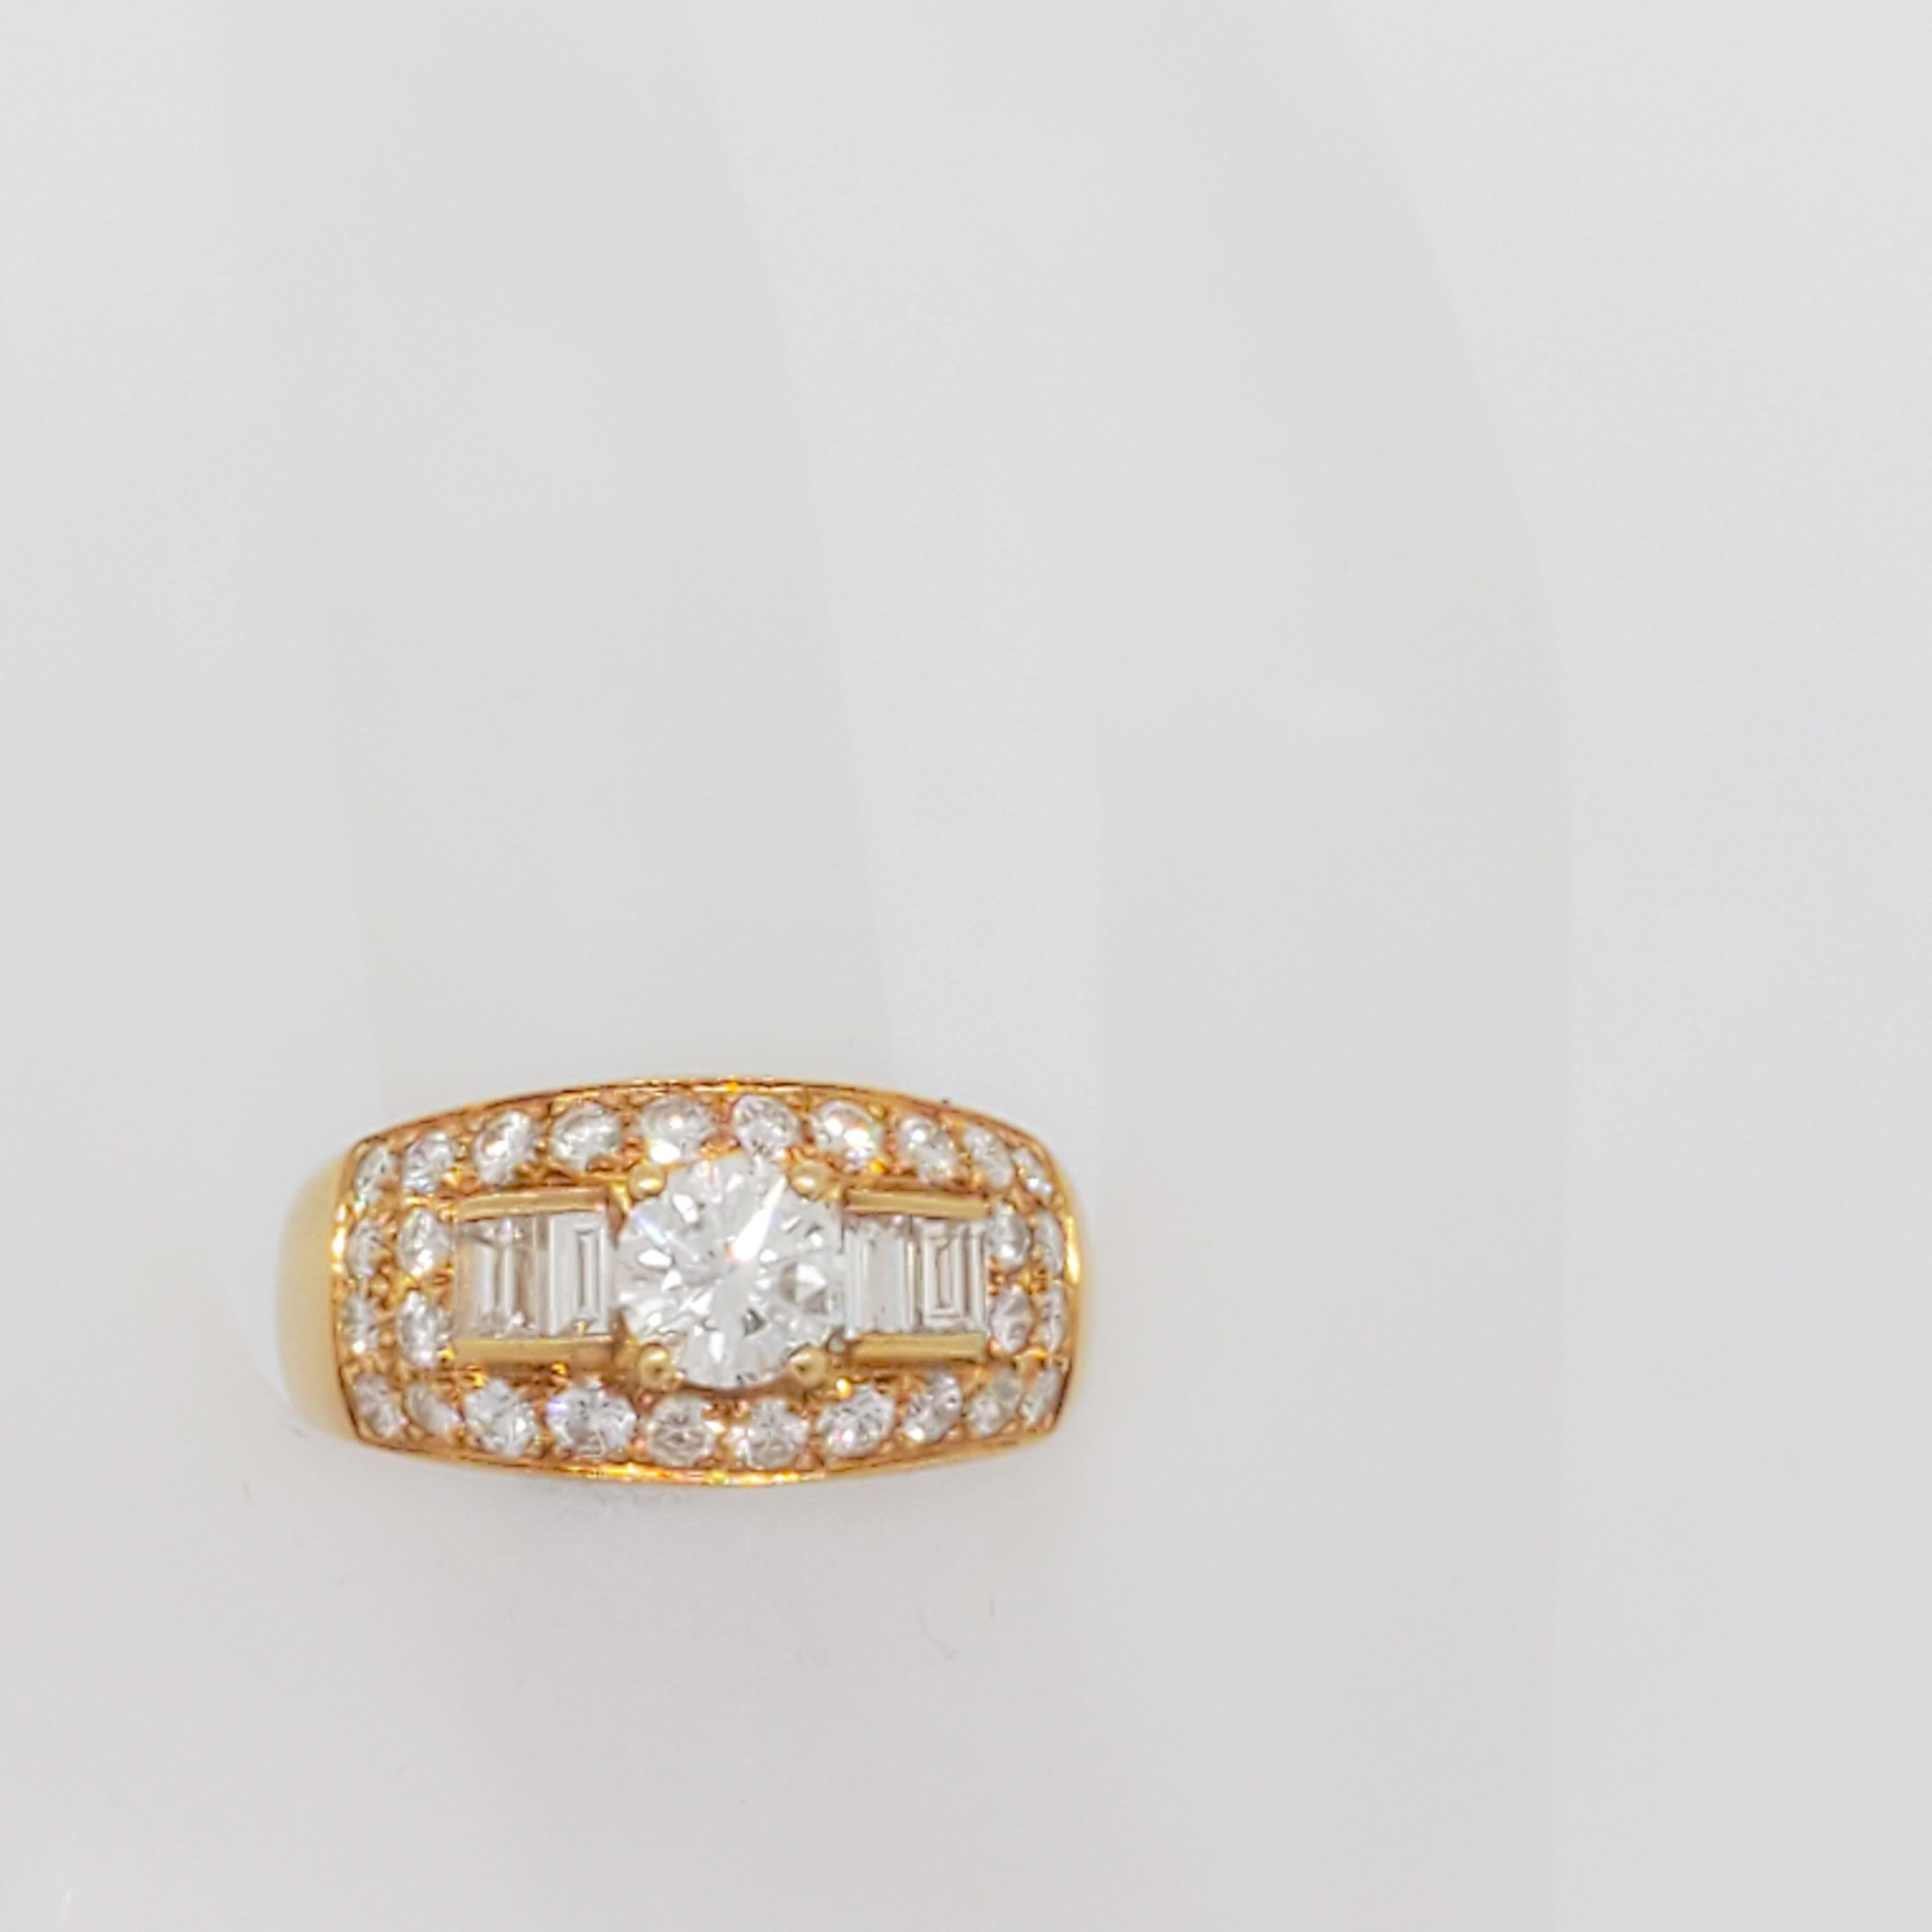 Women's or Men's Estate Bulgari White Diamond Ring in 18k Yellow Gold